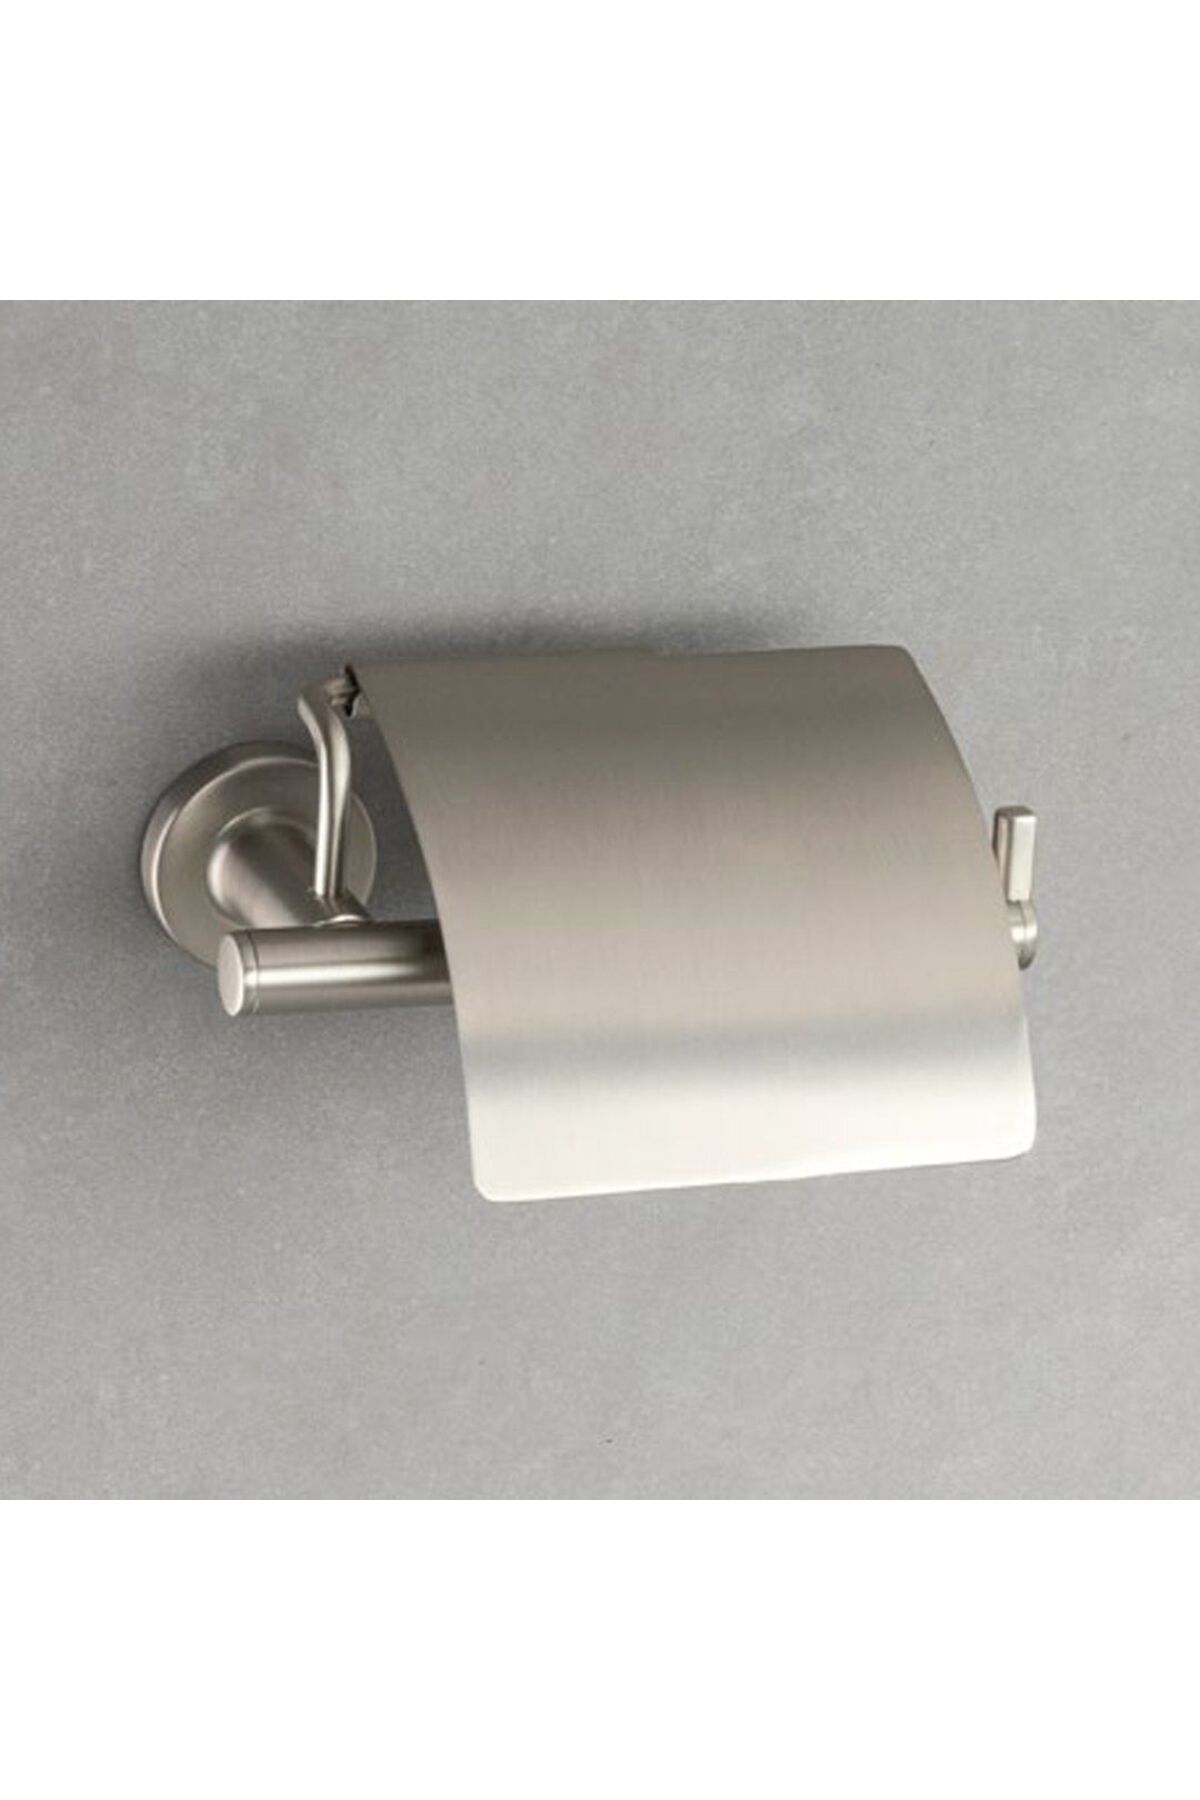 Hoop Kapaklı Tuvalet Kağıtlığı Saten Renk 85X118X170 mm